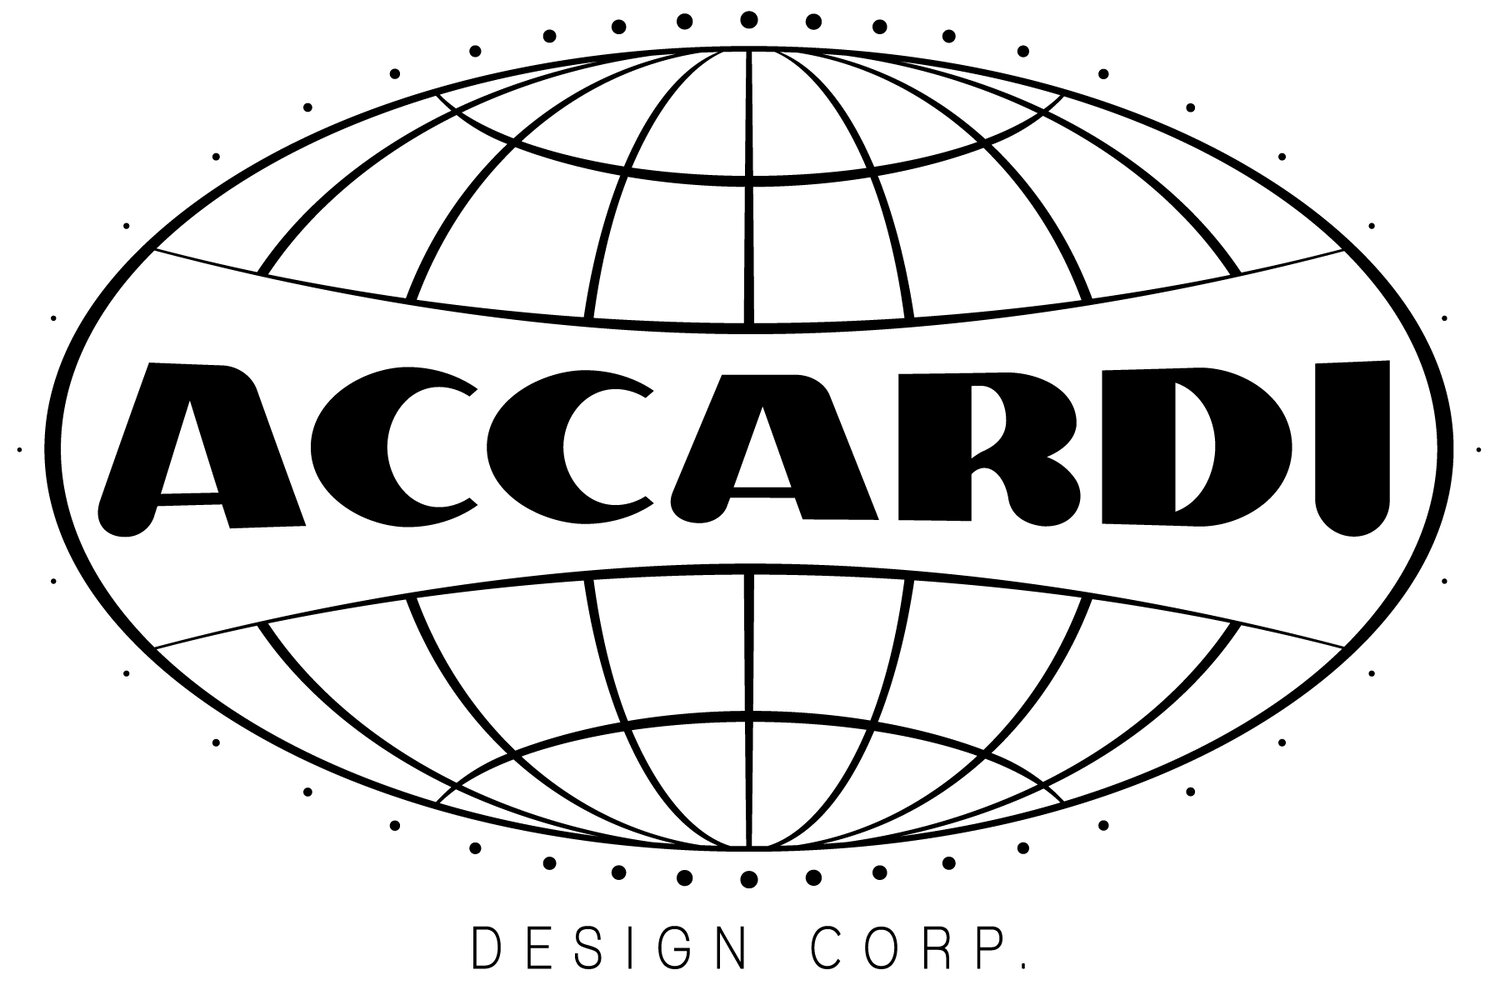 Accardi Design CORP.